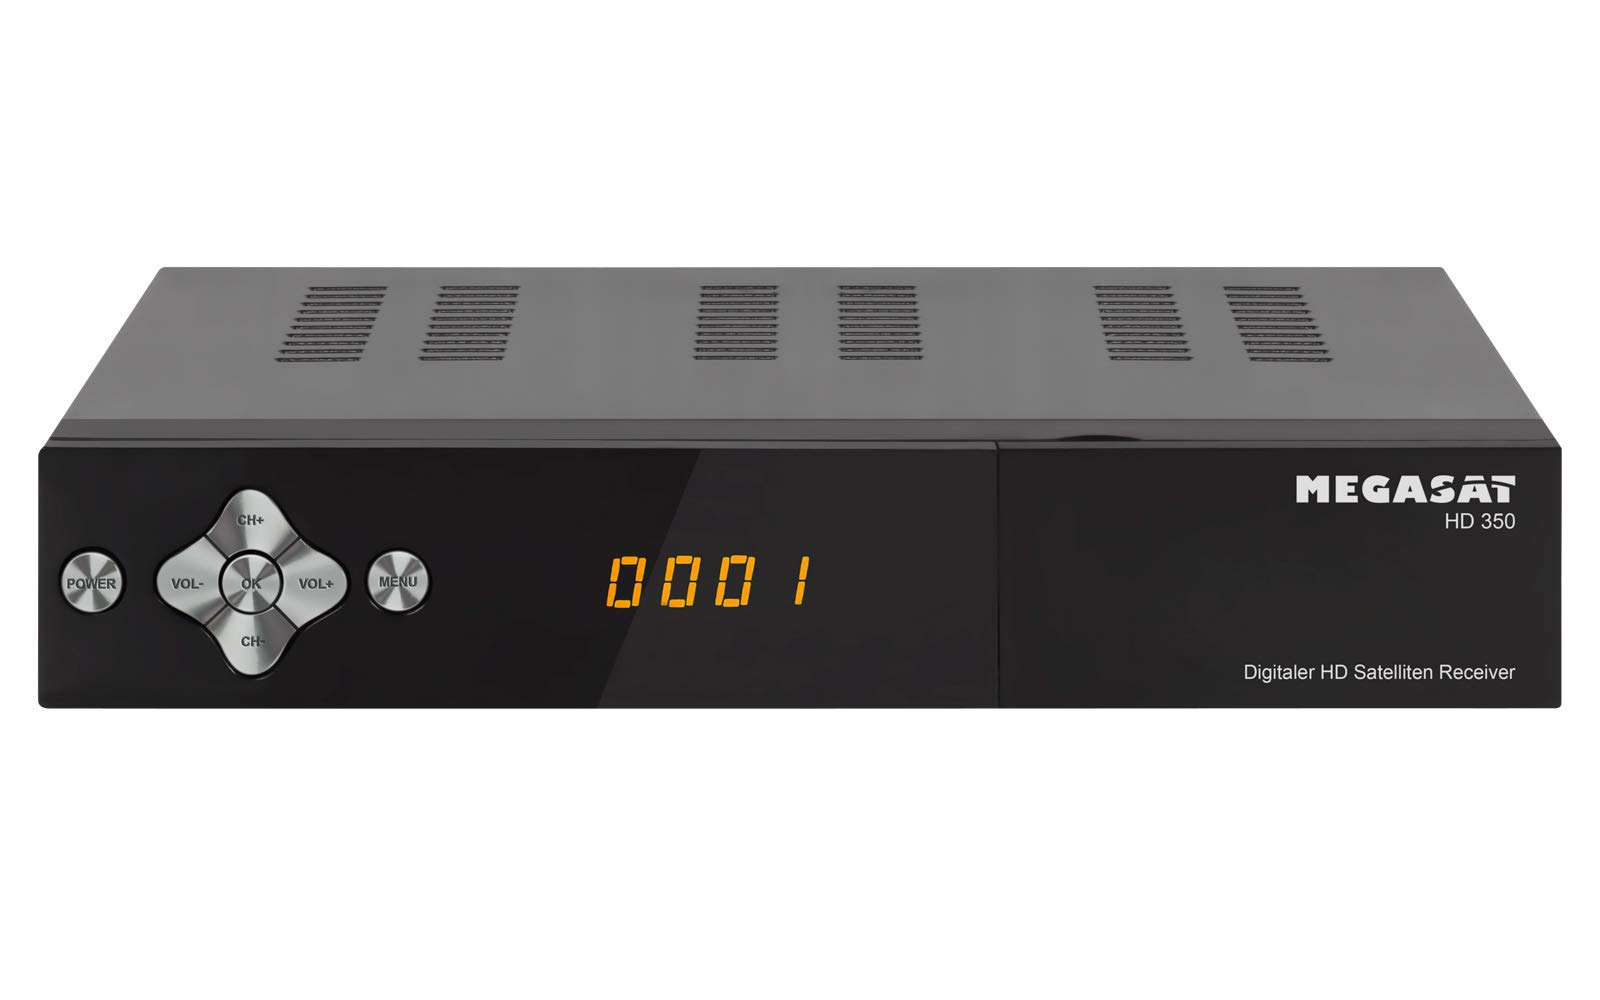 Megasta Sat-Receiver Megasat HD 350, 12 / 230 Volt von Megasat